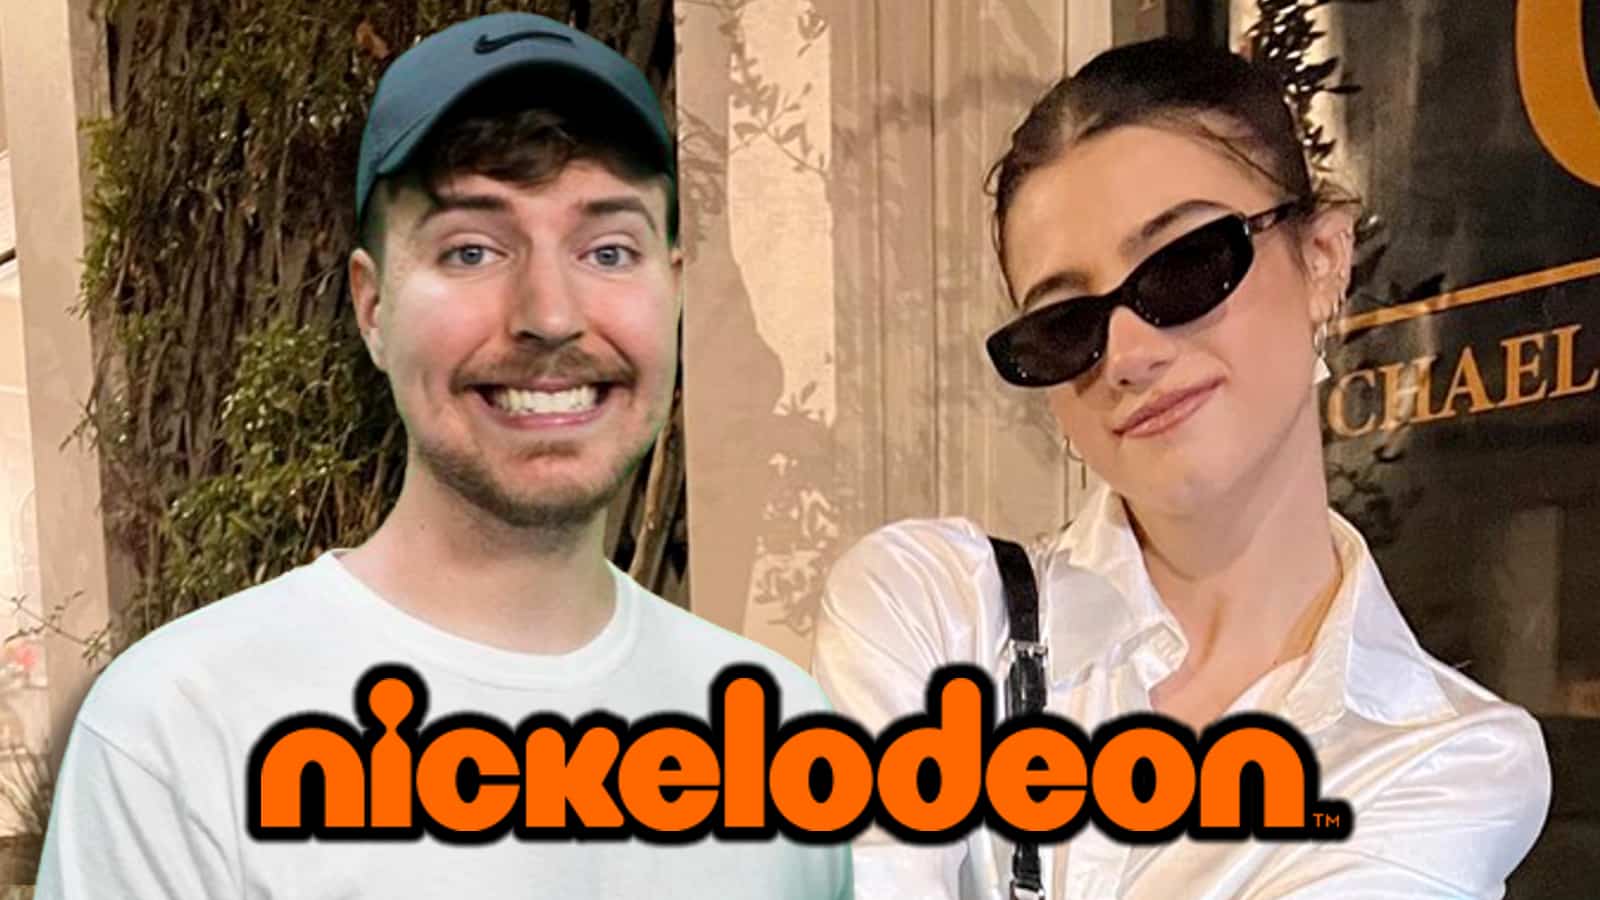 MrBeast and Charli D'Amelio next to the Nickelodeon logo